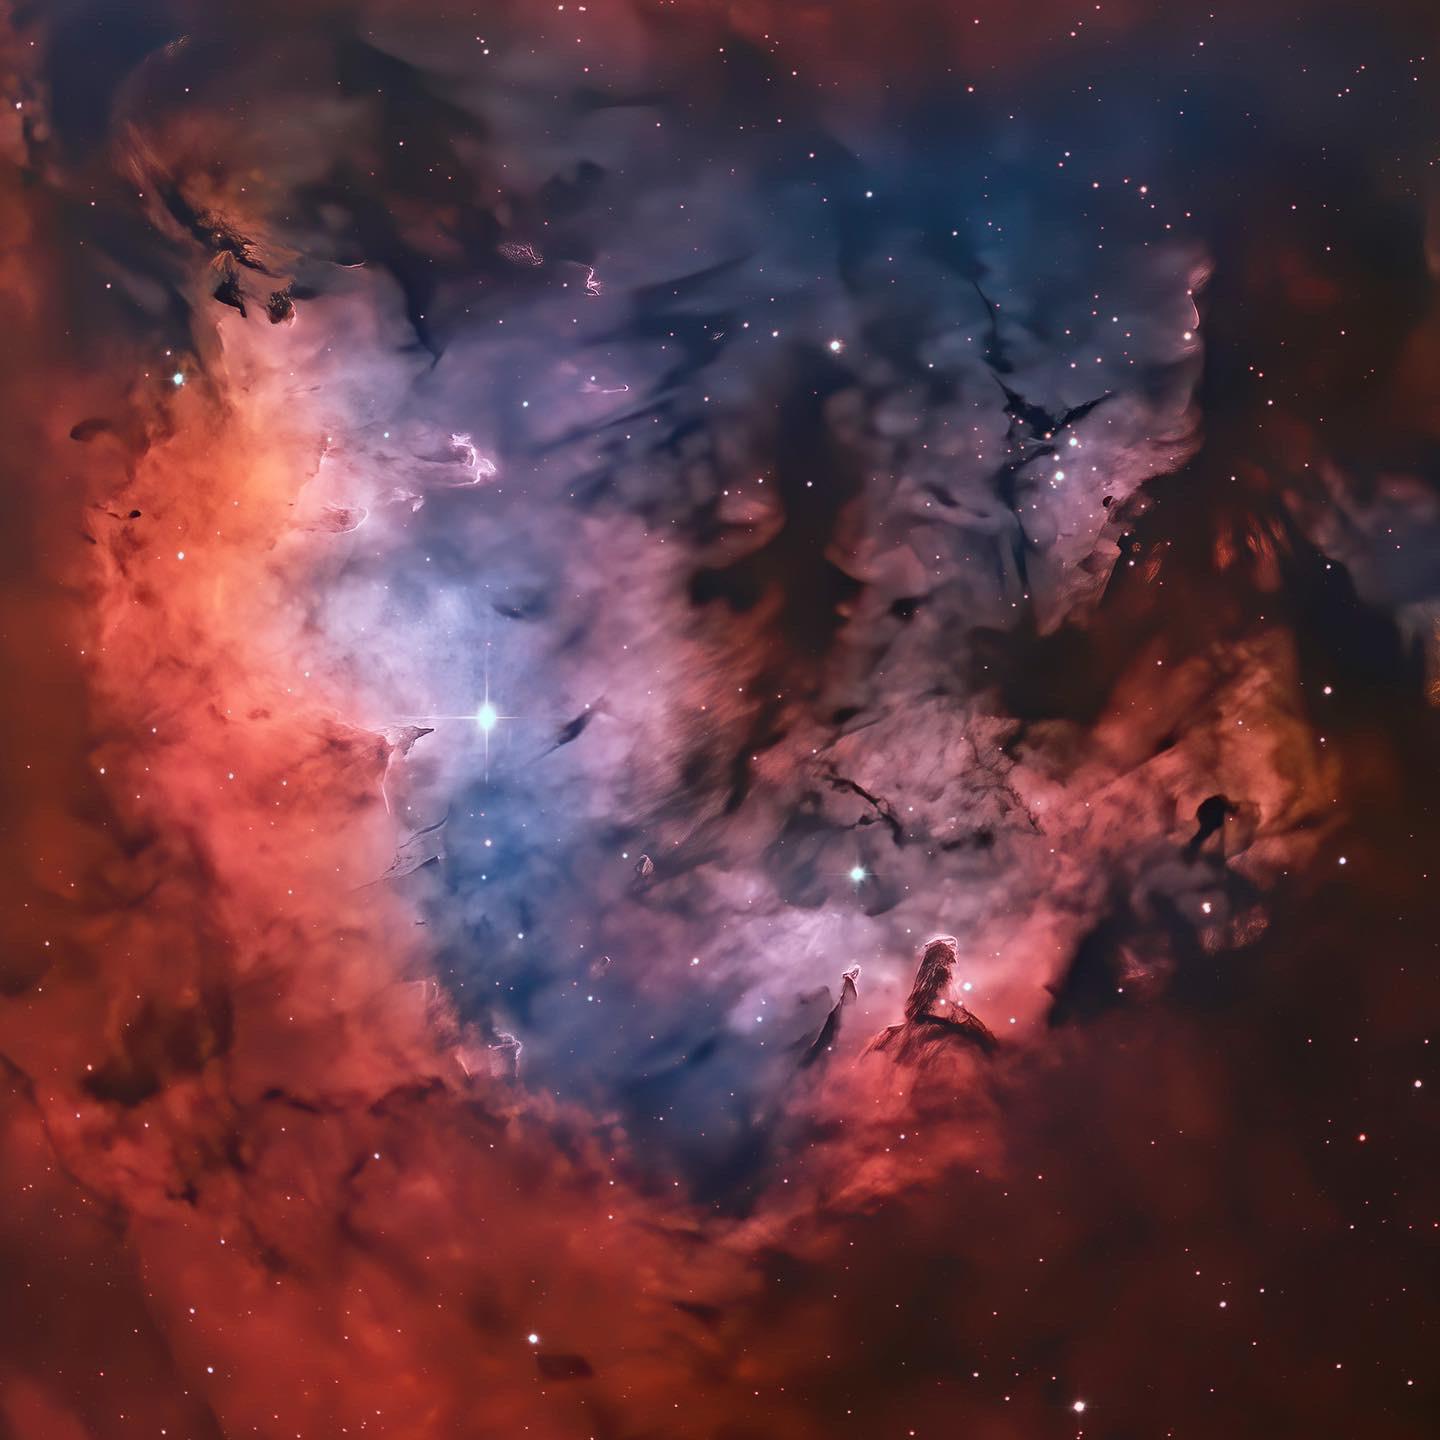 A nameless nebula, NASA needs to name this. This is 6.25 hours exposure time.